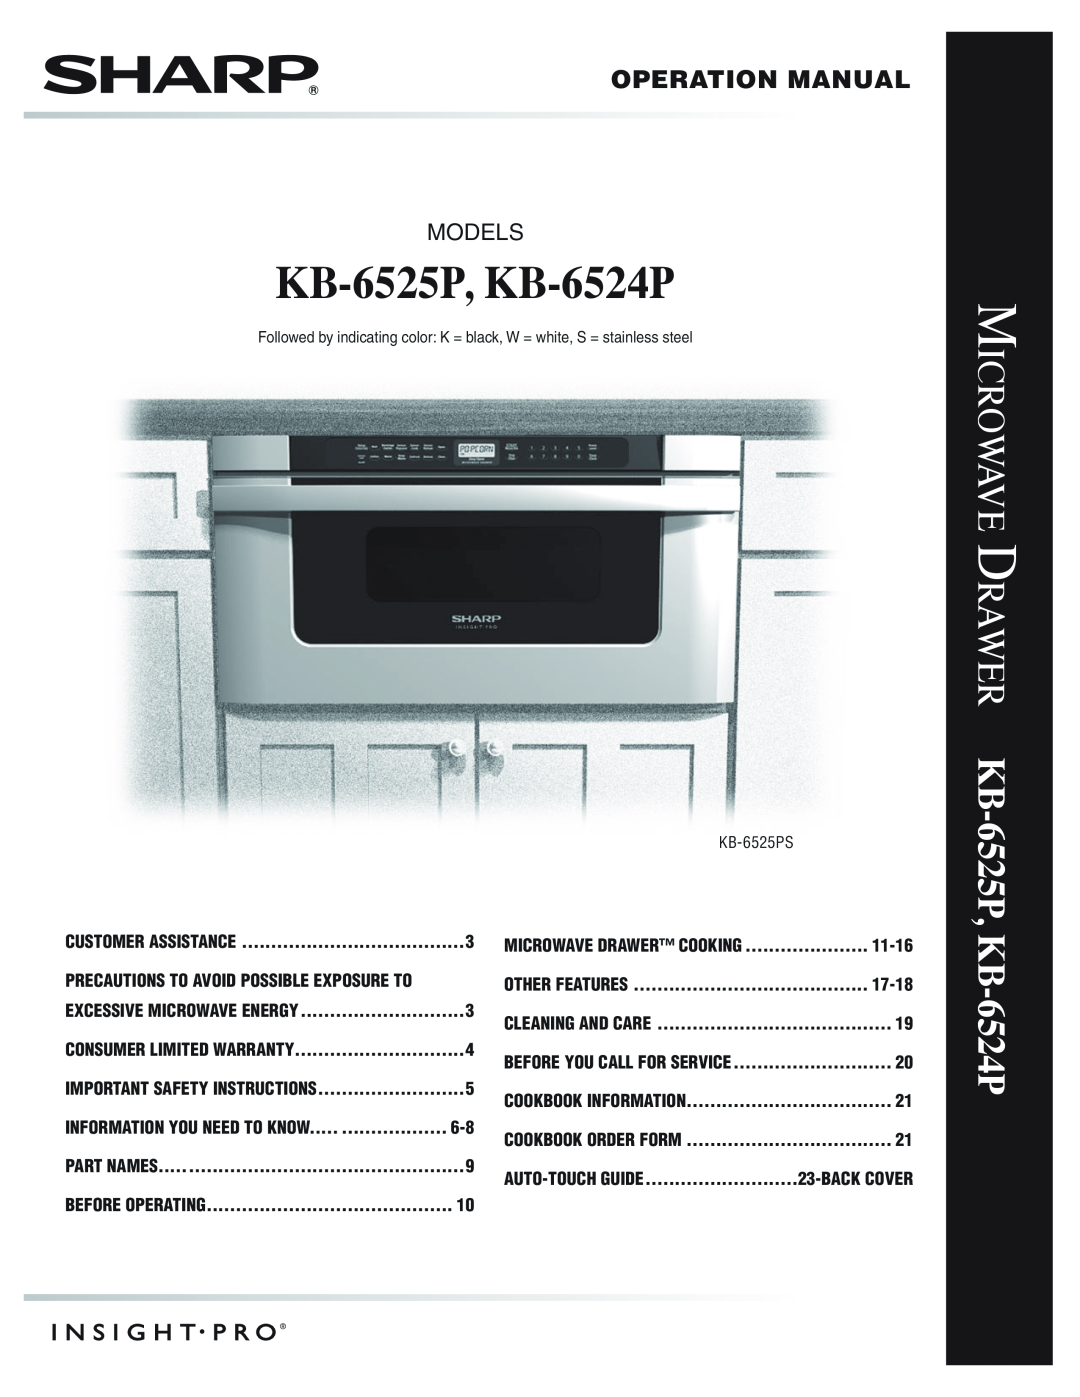 Sharp KB6525PW operation manual KB-6525P, KB-6524P, Microwave Drawer KB-6525P, Operation Manual, ModelS, before operating 